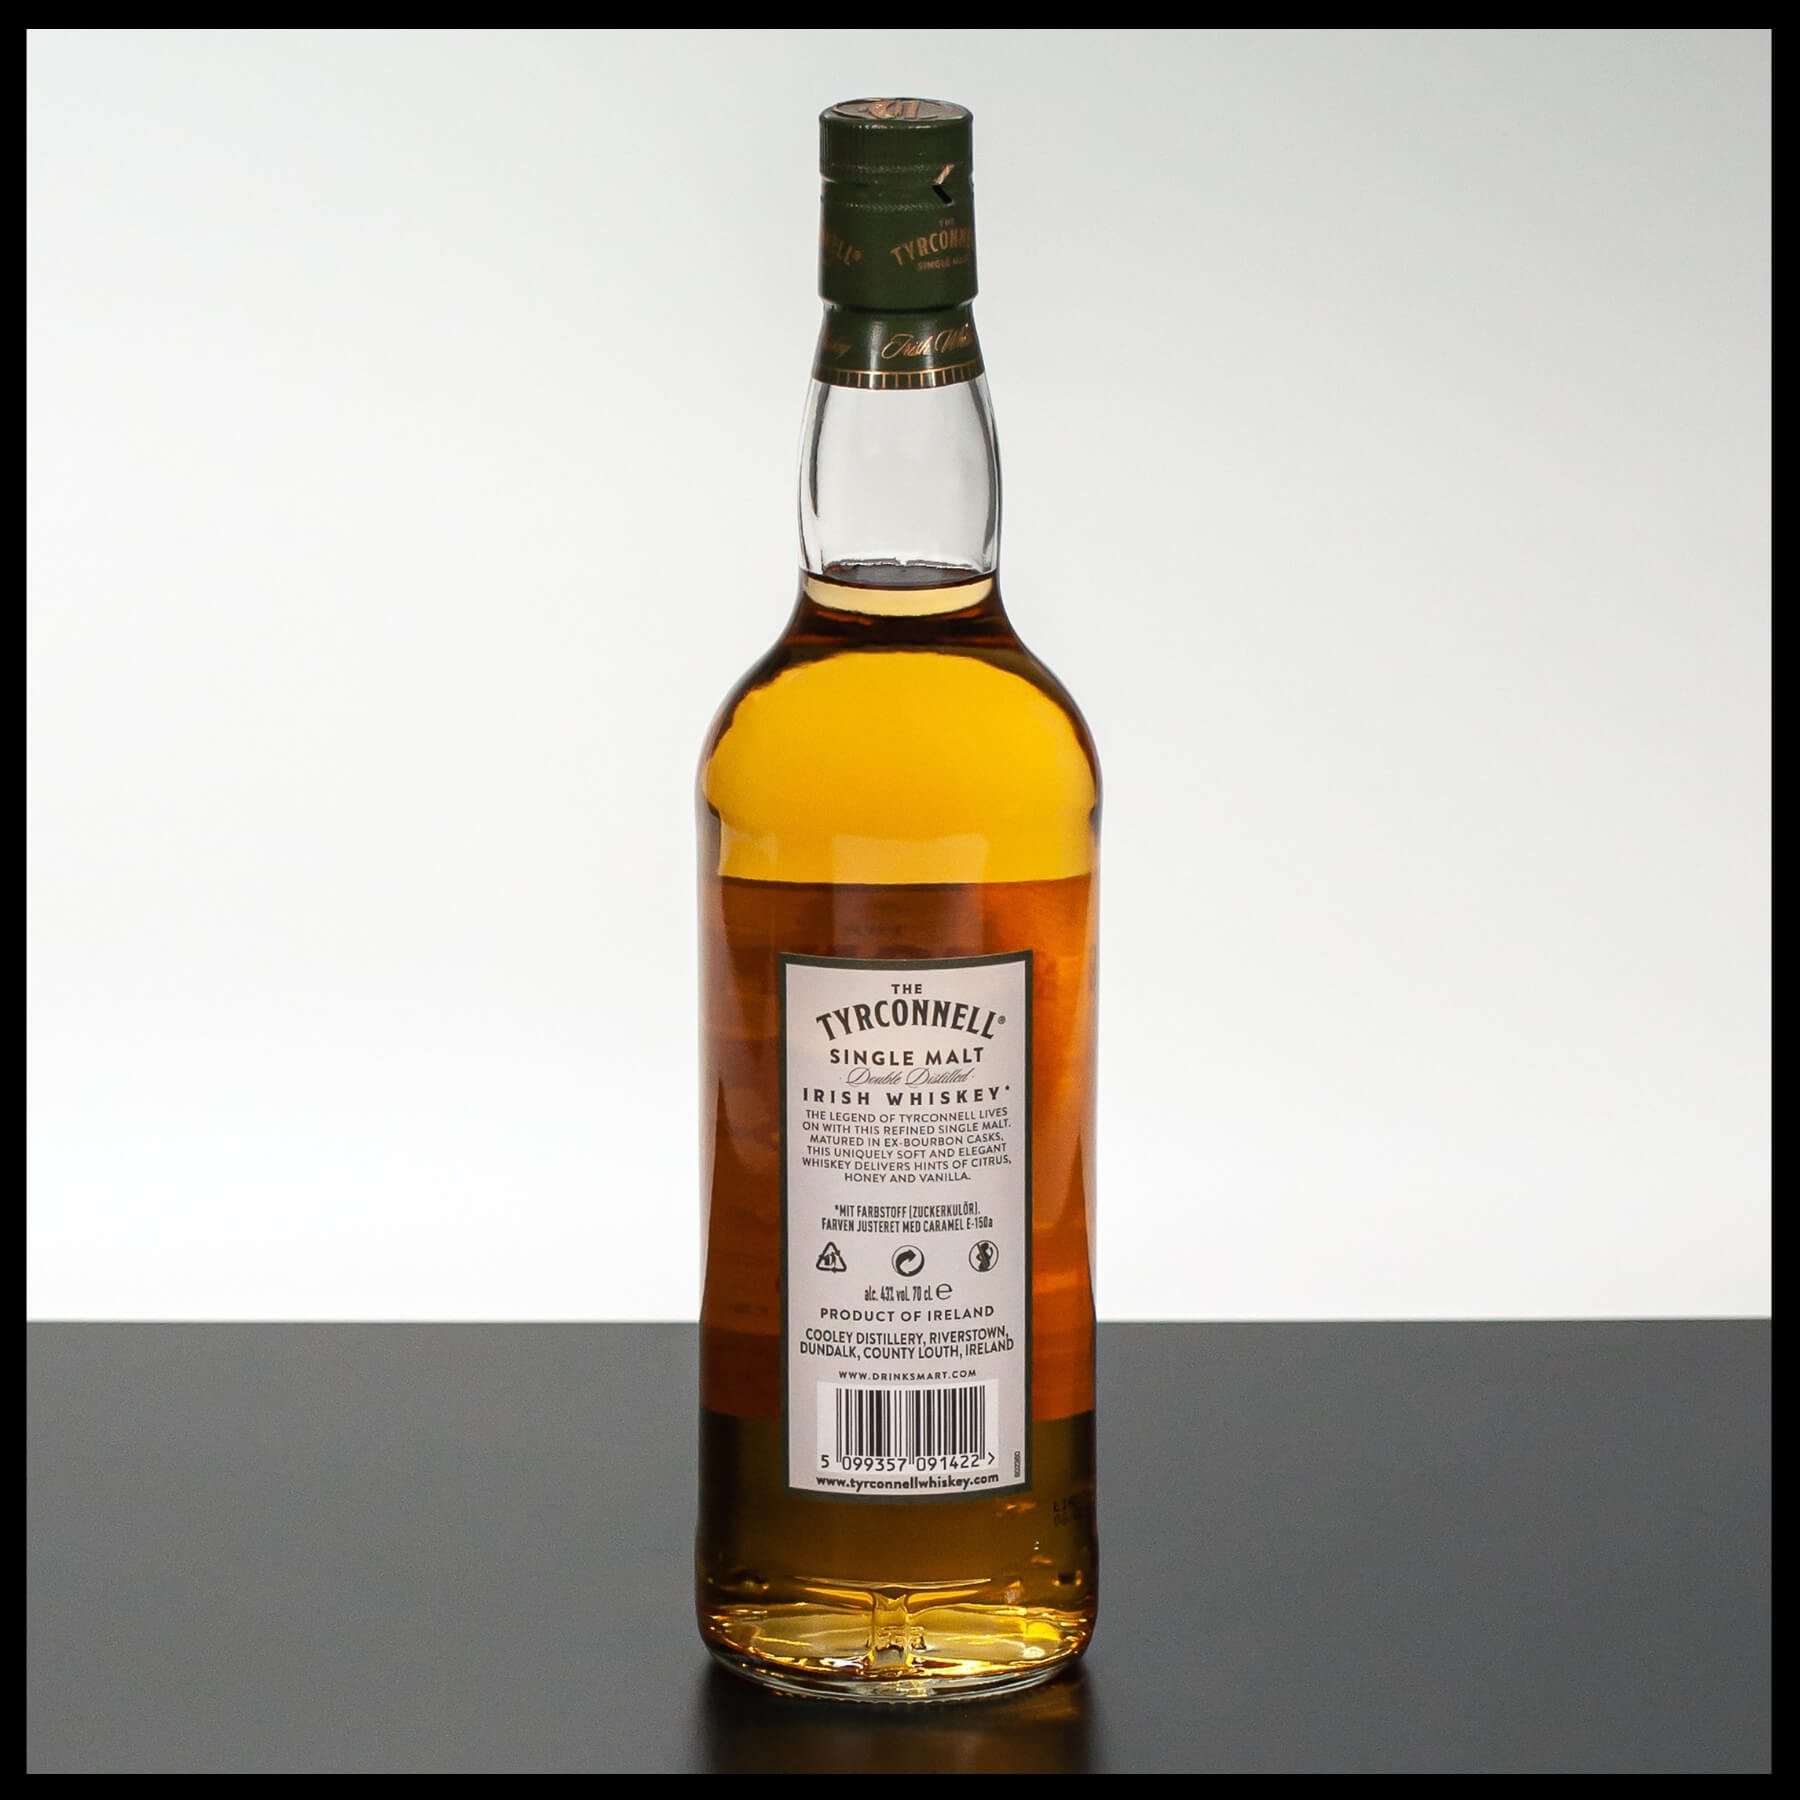 The Tyrconnel Single Malt Irish Whiskey 0,7L - 43% Vol. - Trinklusiv